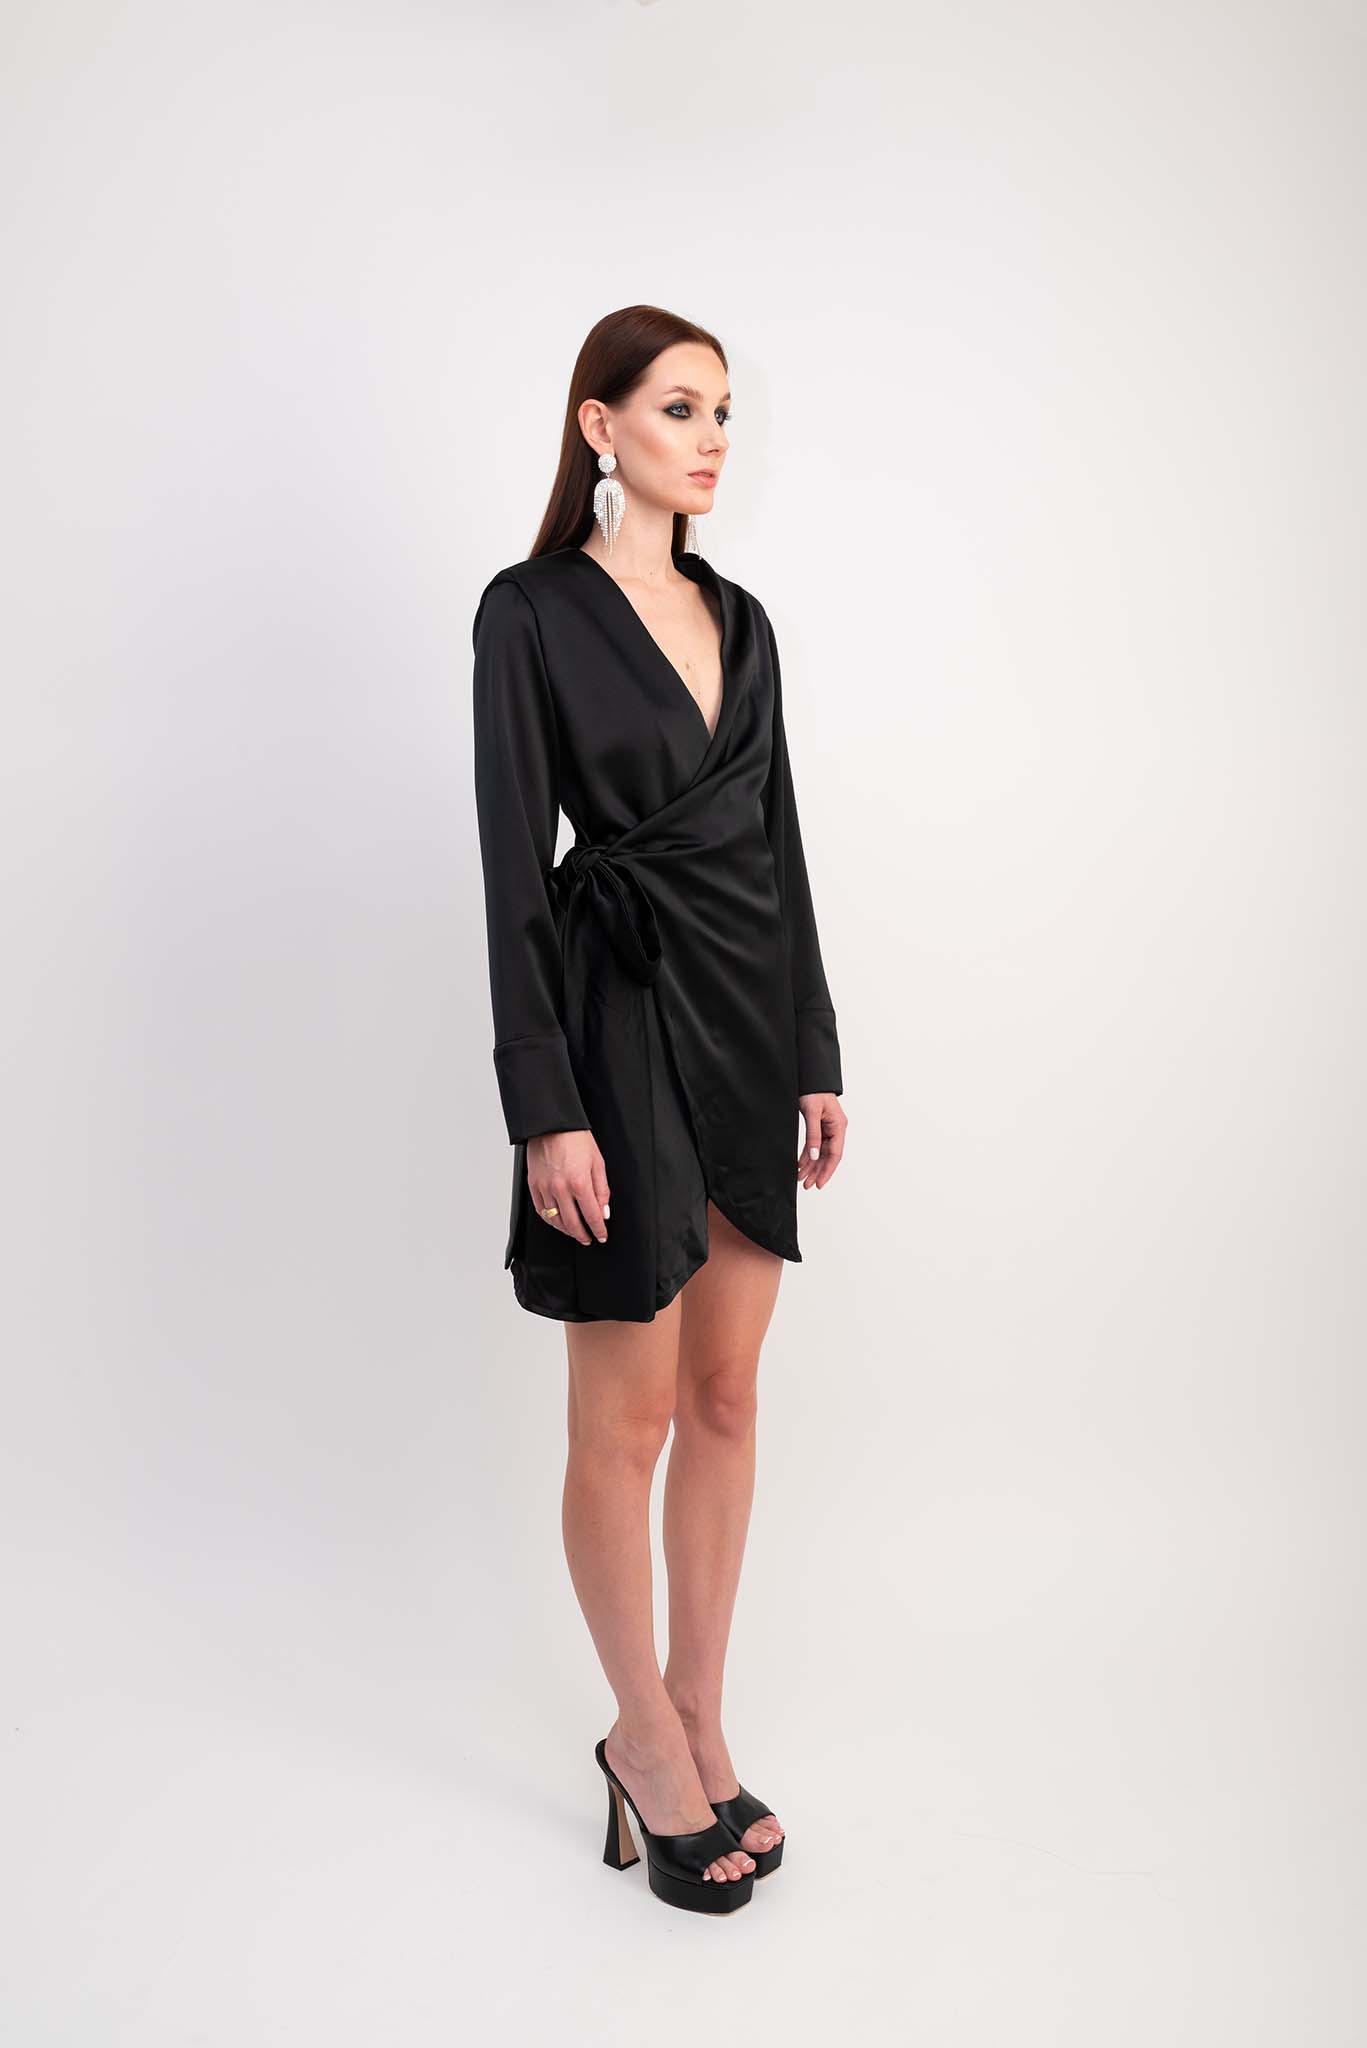 IRA by Irini Charalampous, @irathebrand online shop fashionable ready-to-wear womenswear brand satin dress CELIA color black high heels Cyprus Greece